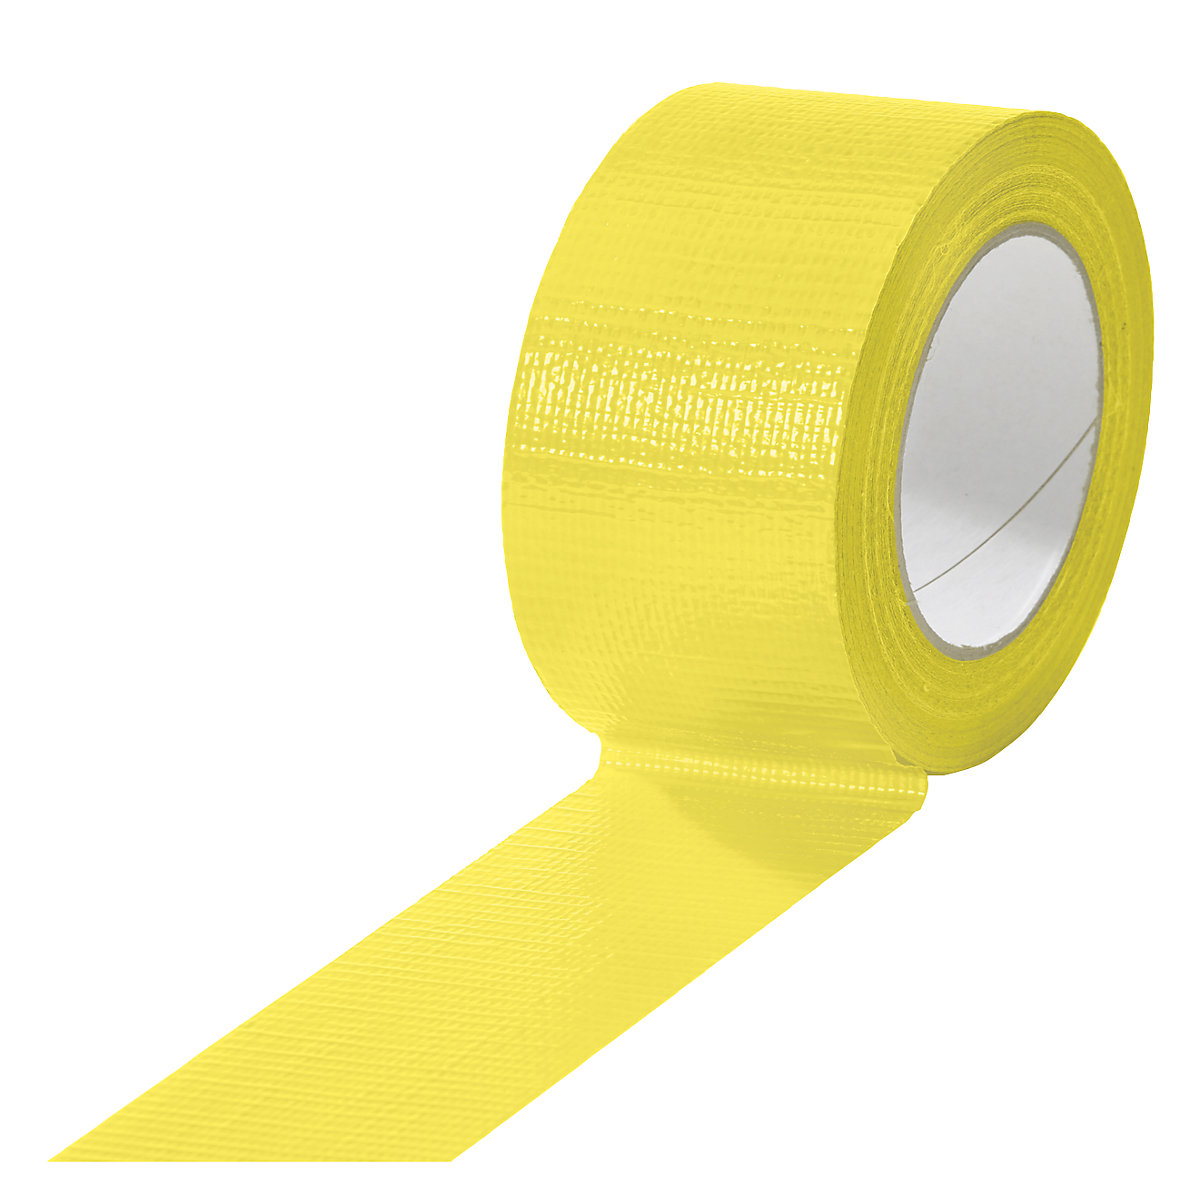 Tkaninová páska, v různých barvách, bal.j. 18 rolí, žlutá, šířka pásky 50 mm-14